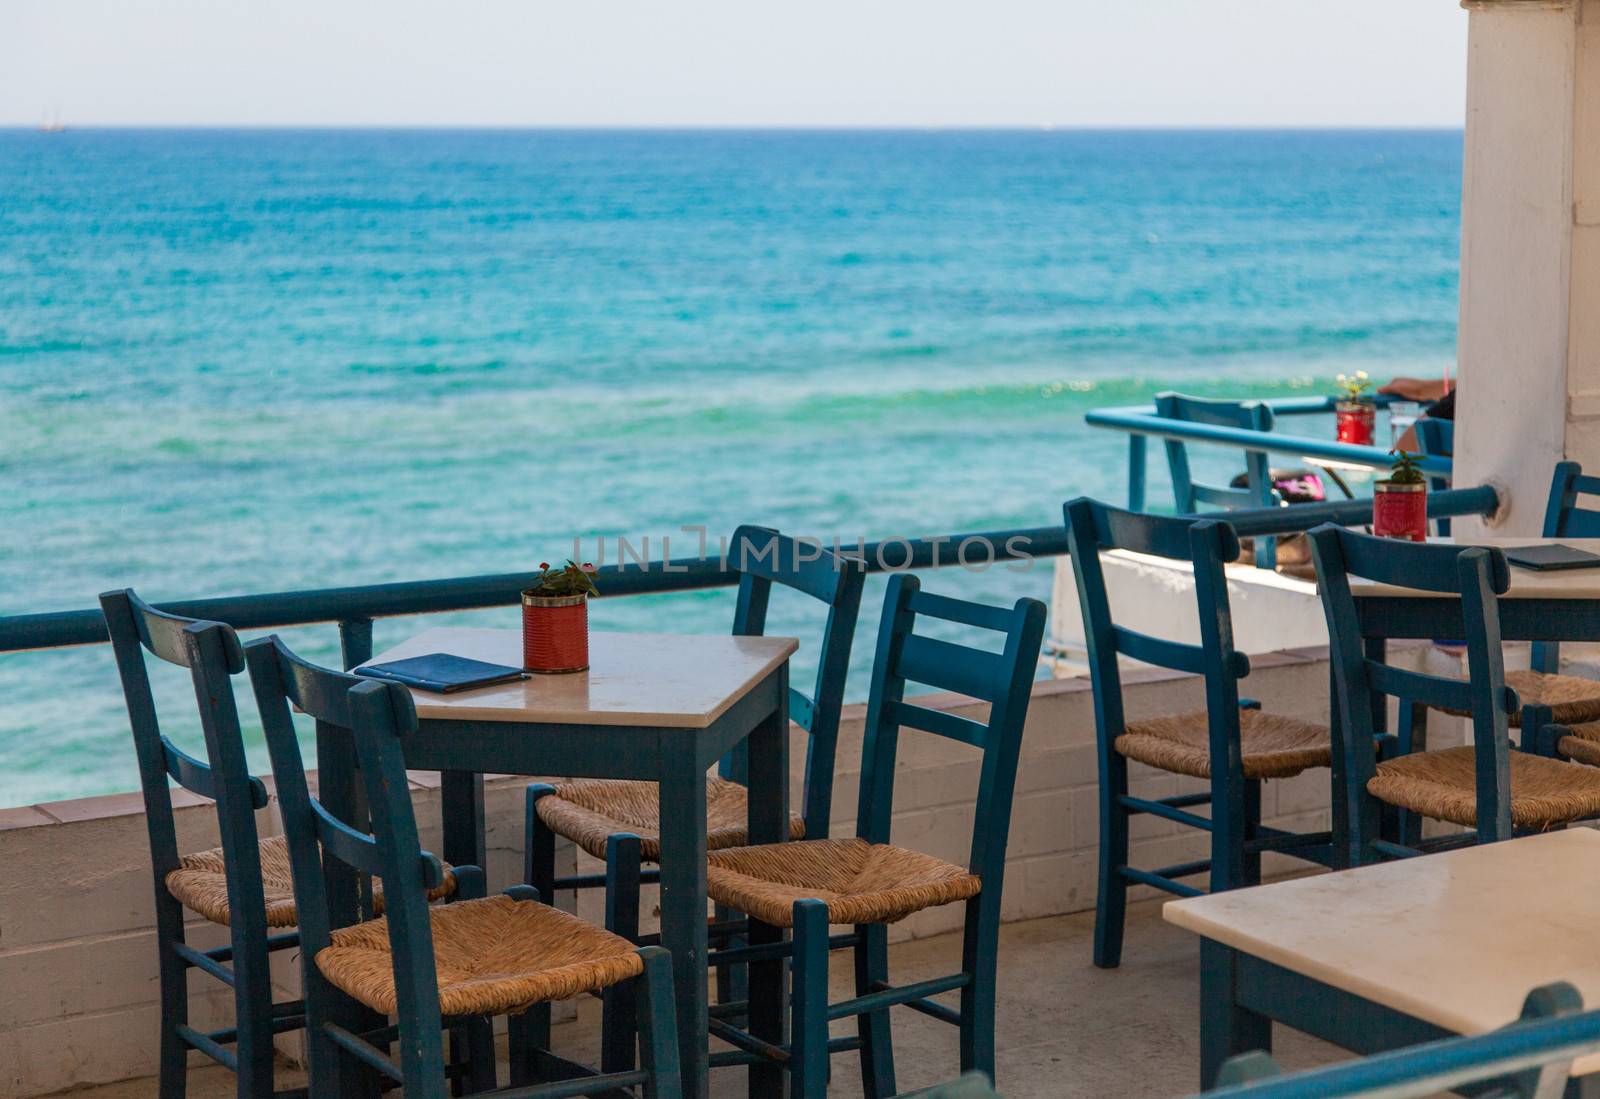 Outdoors cafe, sea view, Crete, Greece 